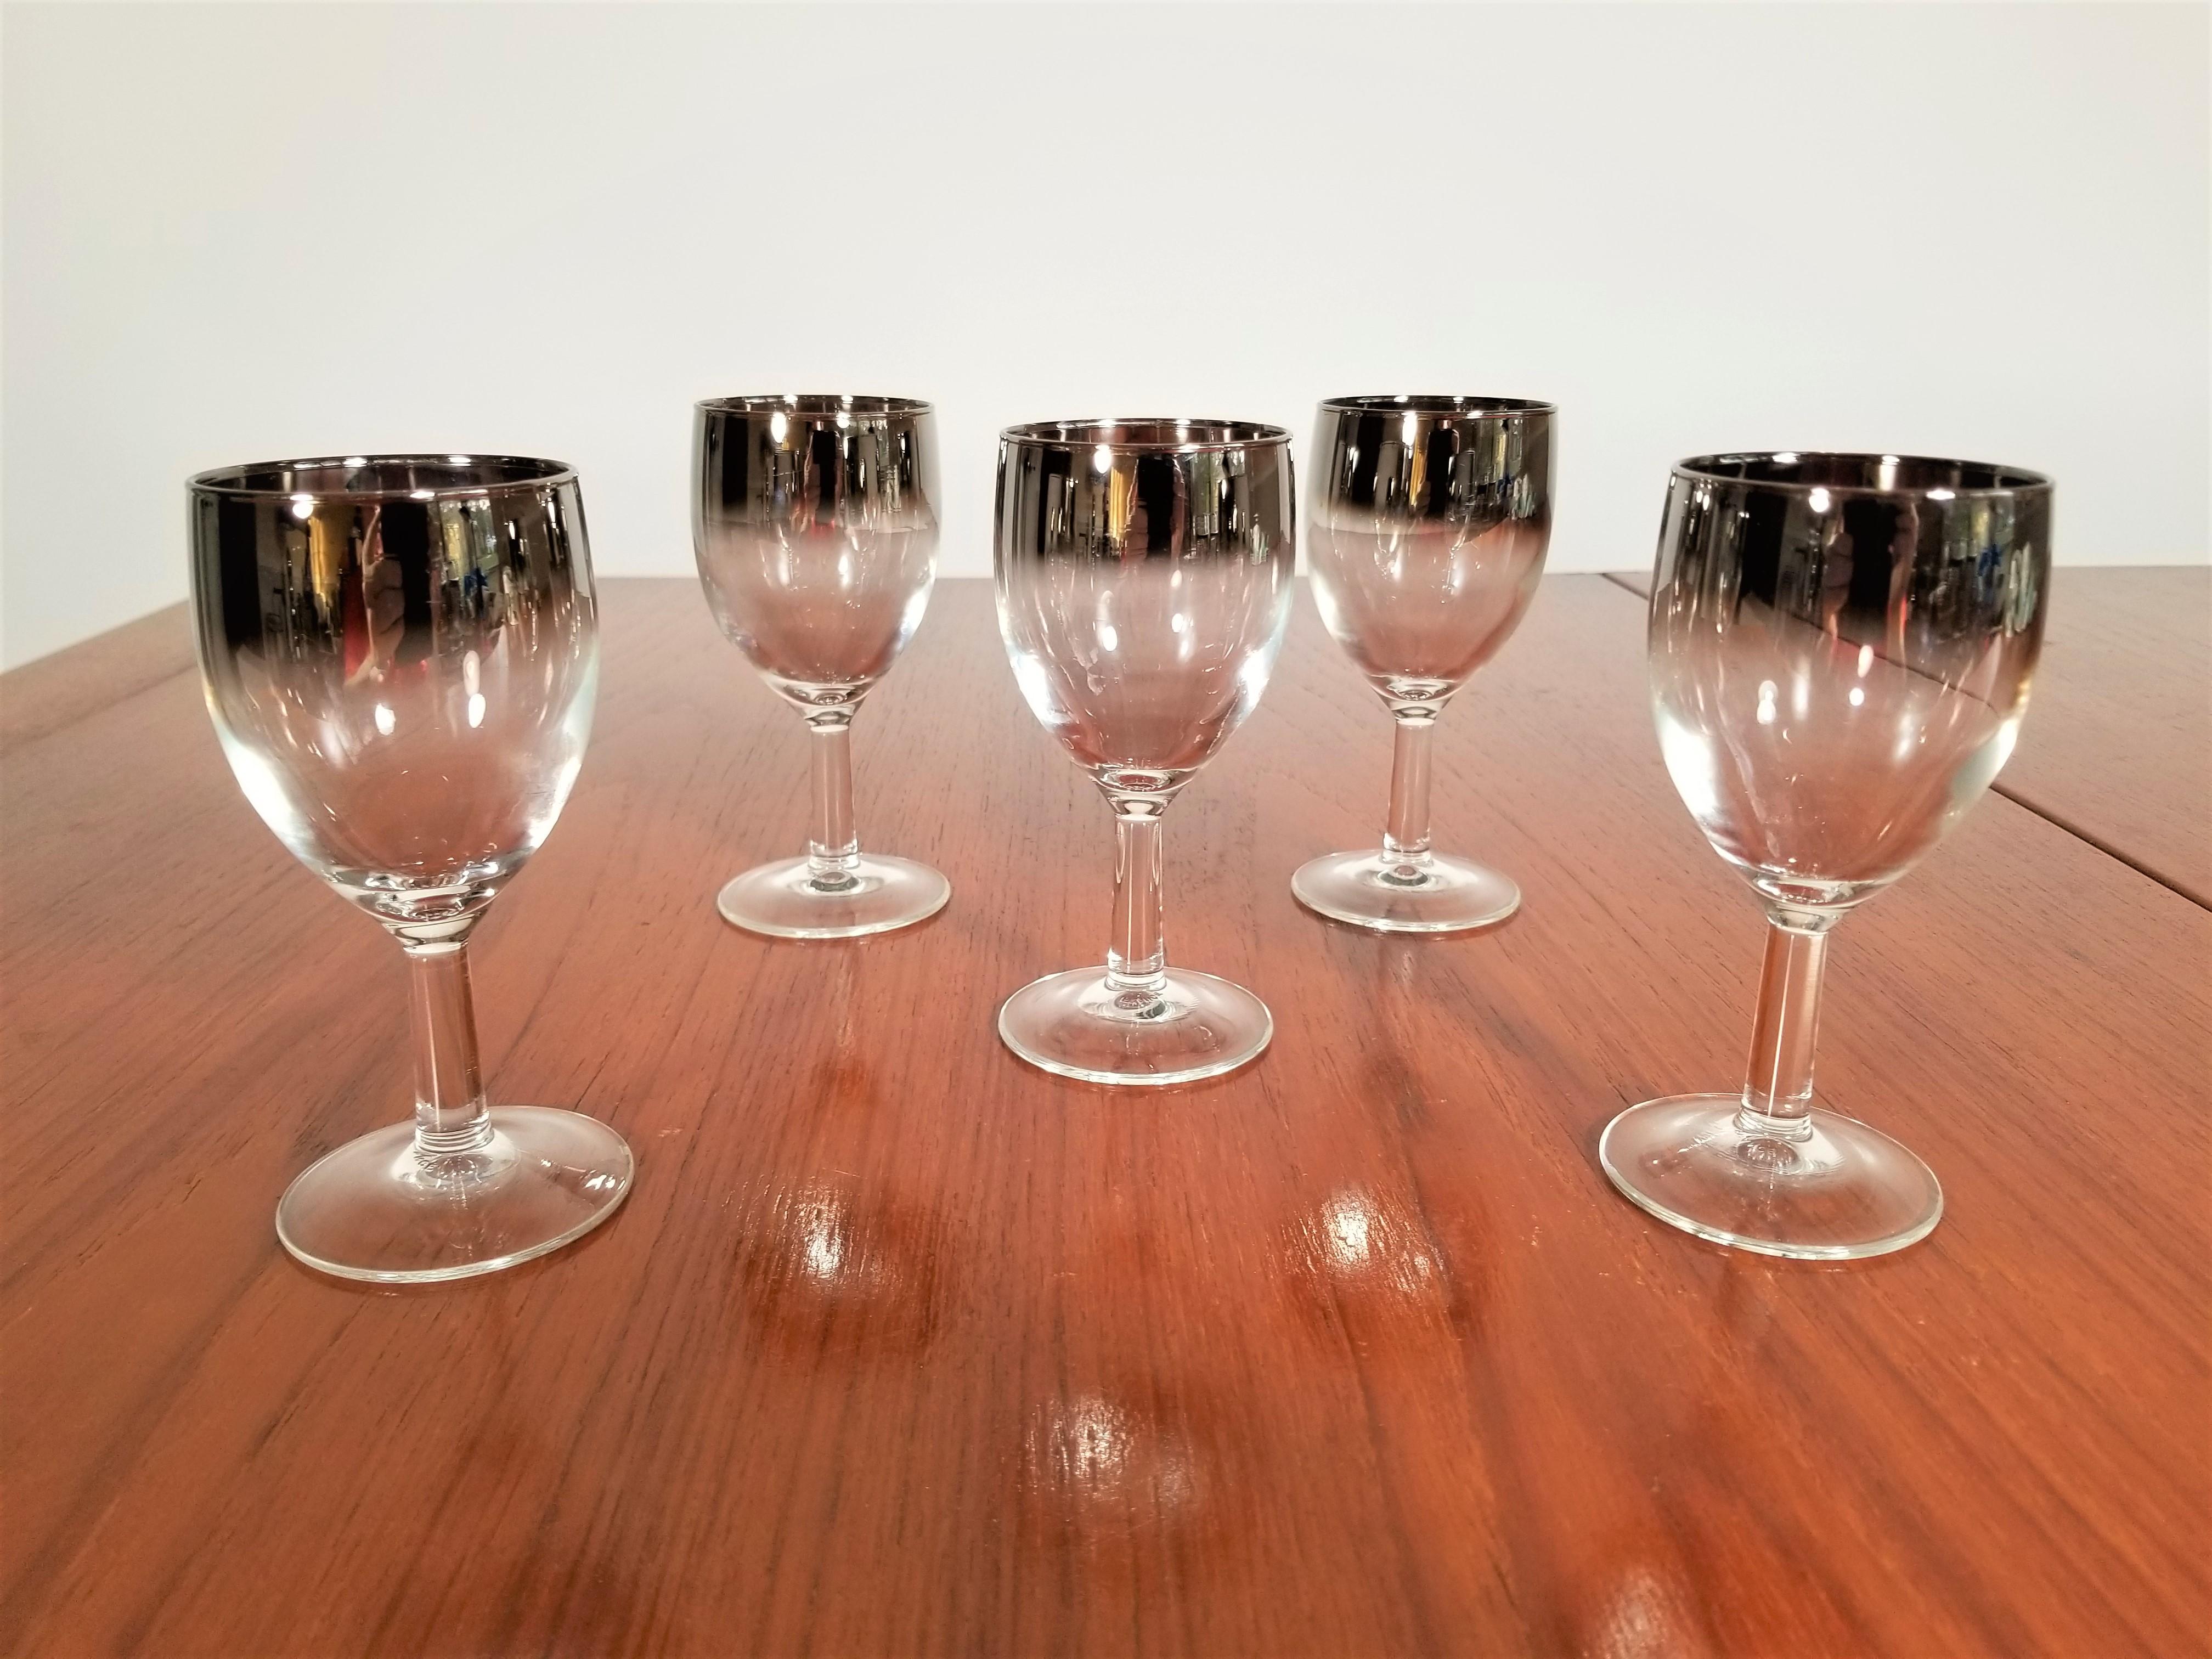 Midcentury Dorothy Thorpe set of 5 stemware glasses for wine or cordial.